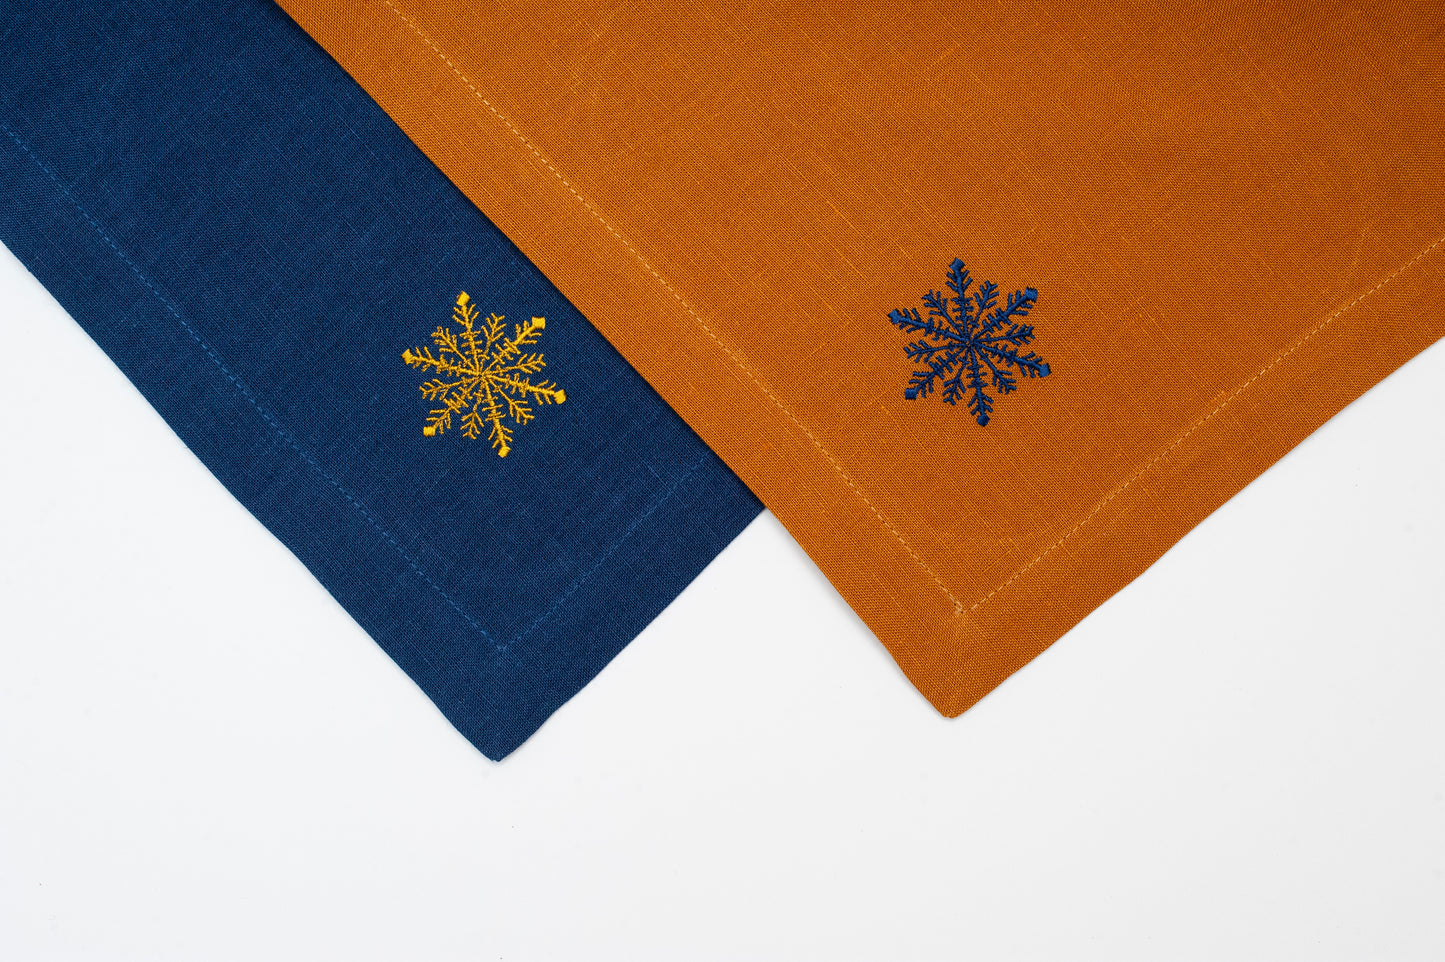 Embroidered Christmas Table Napkins: A Gift of Festive Charm